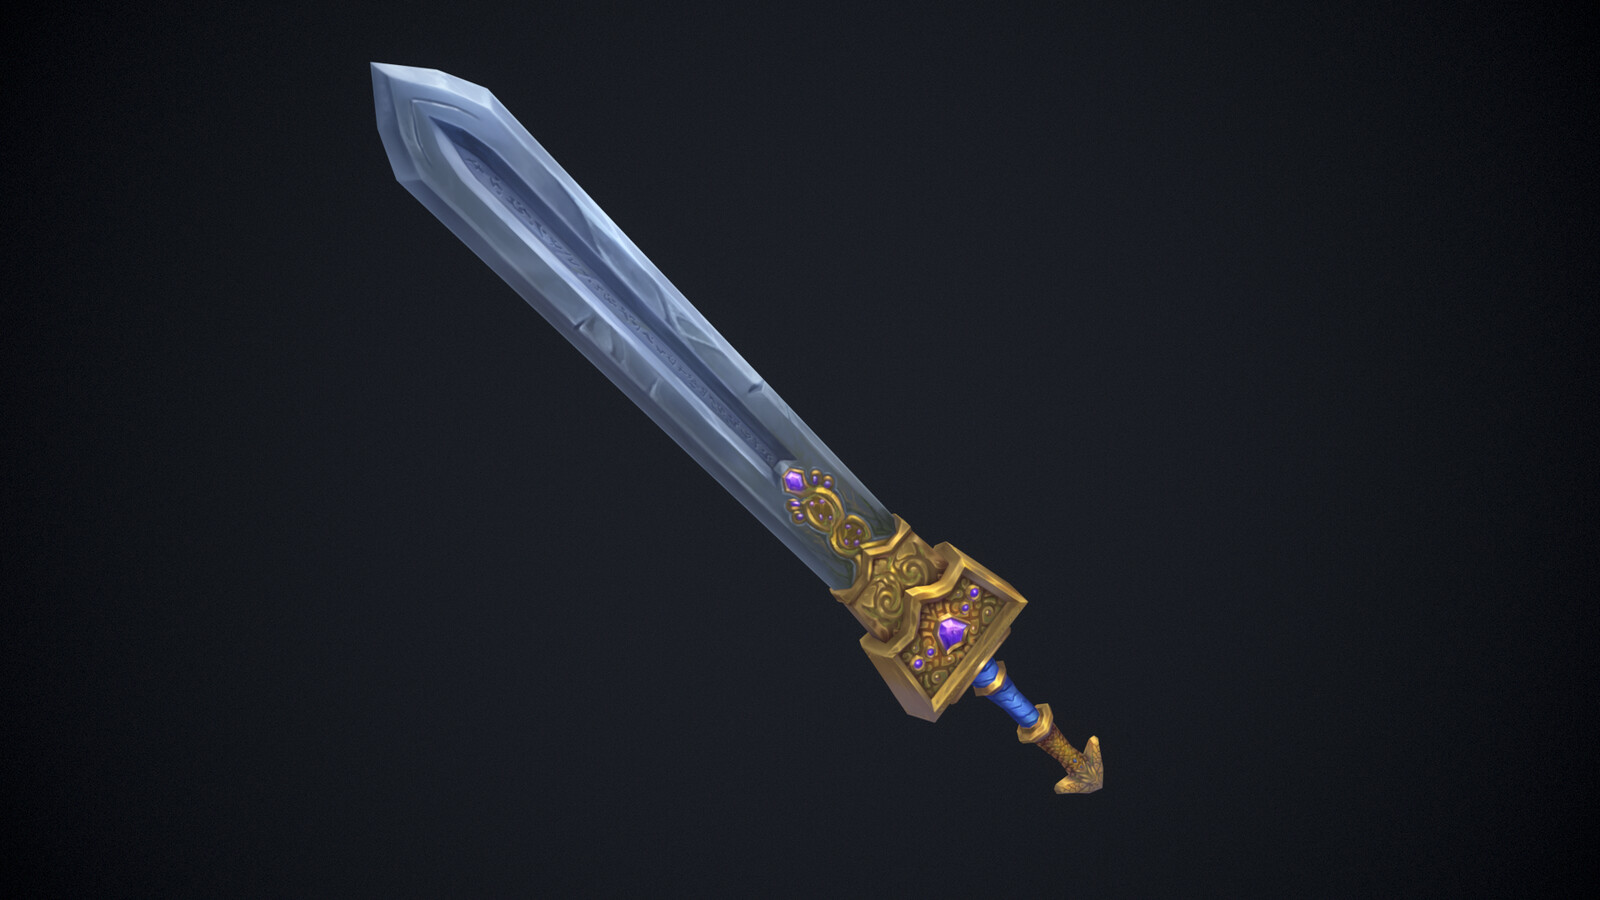 Sword of Blaidd | Stylized Sword from Elden Ring